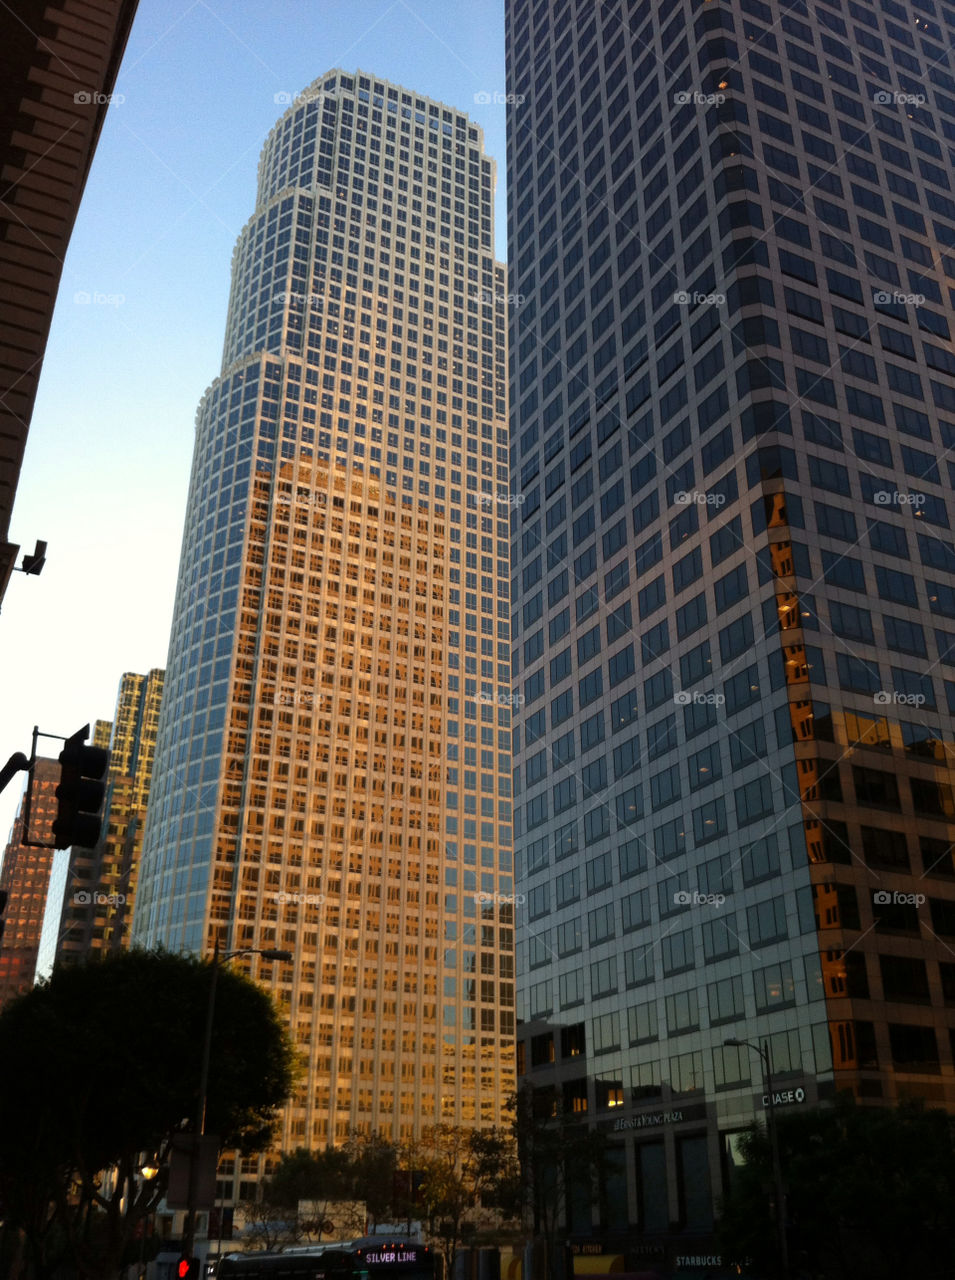 los angeles skyscraper office building by paul.reilly546